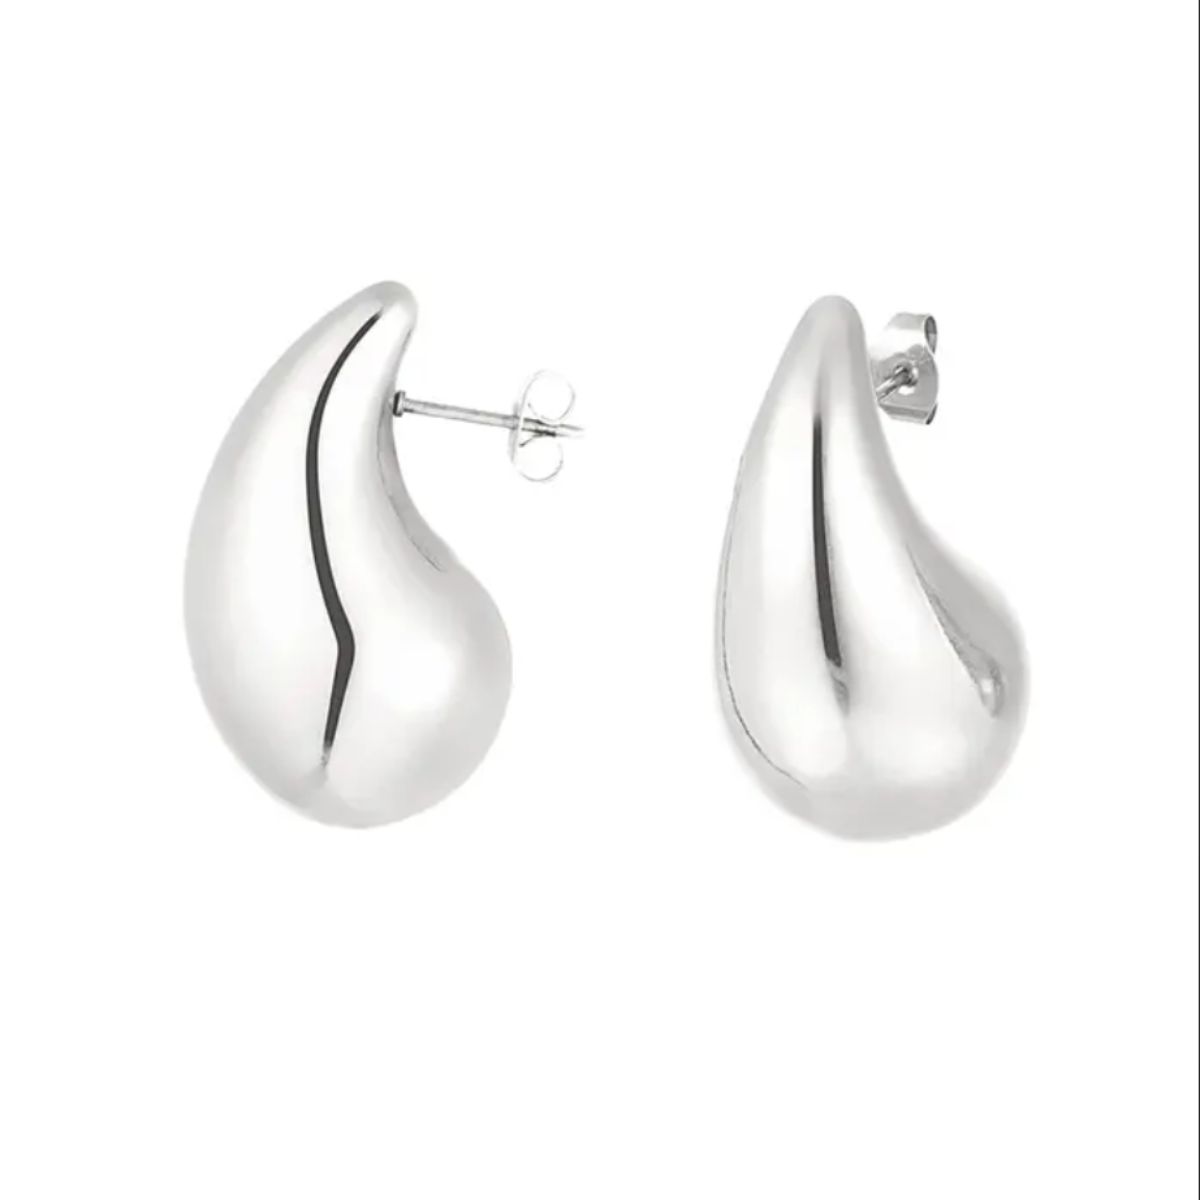 drop-stud-earrings-in-silver-stainless-steel